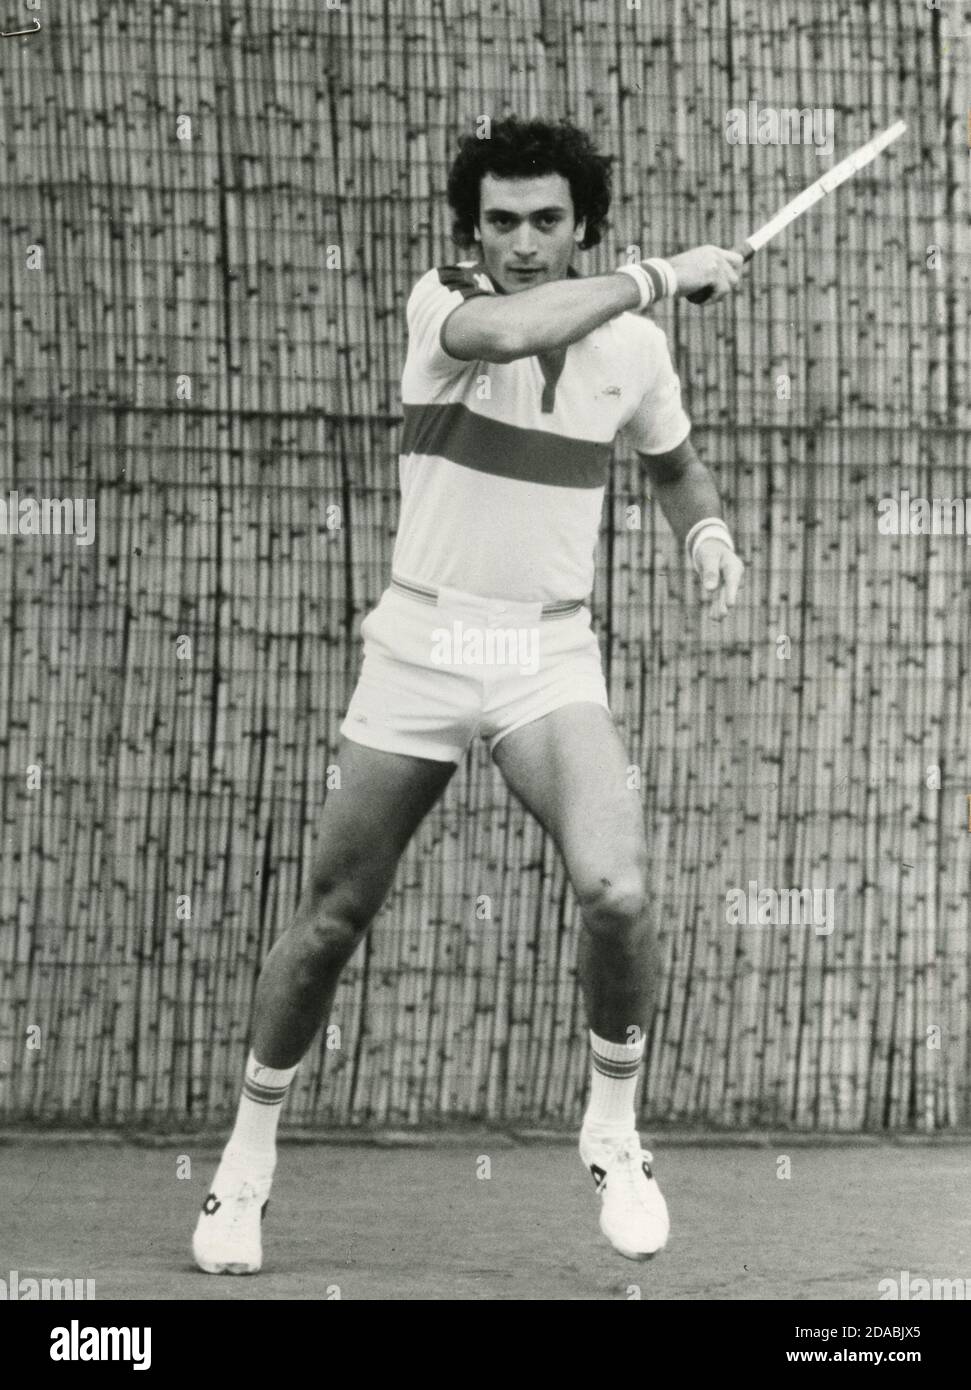 Argentinian tennis player José Luis Clerc, 1970s Stock Photo - Alamy